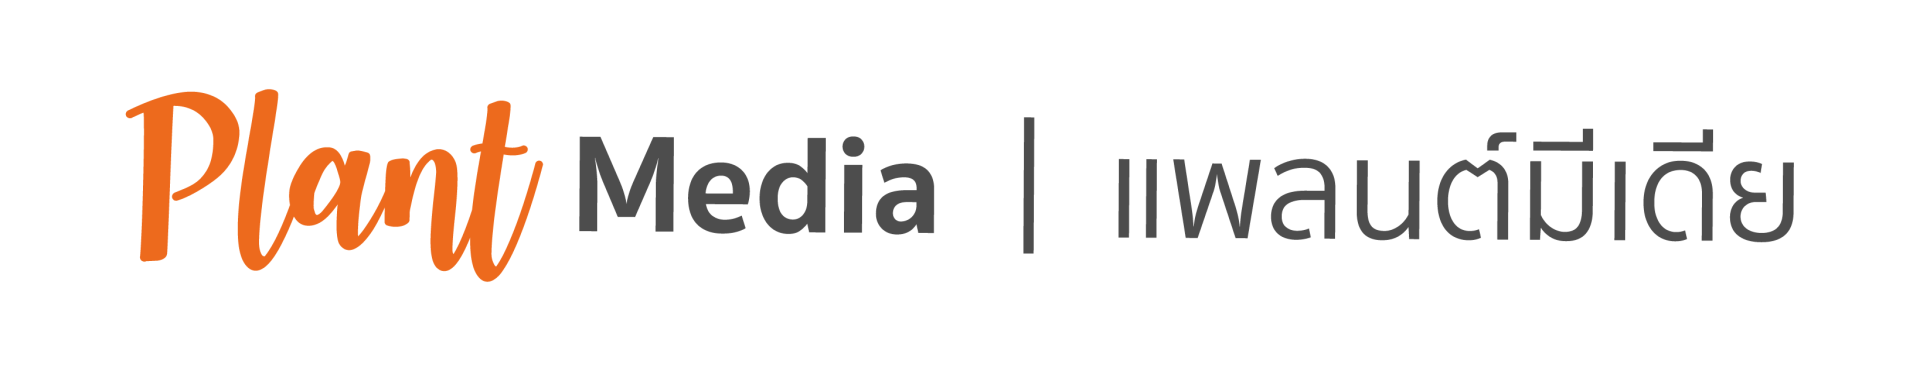 Plant Media แพลนต์มีเดีย Logo โลโก้ ให้บริการออกแบบสื่อสิ่งพิมพ์ ออนไลน์ ดิจิทัล